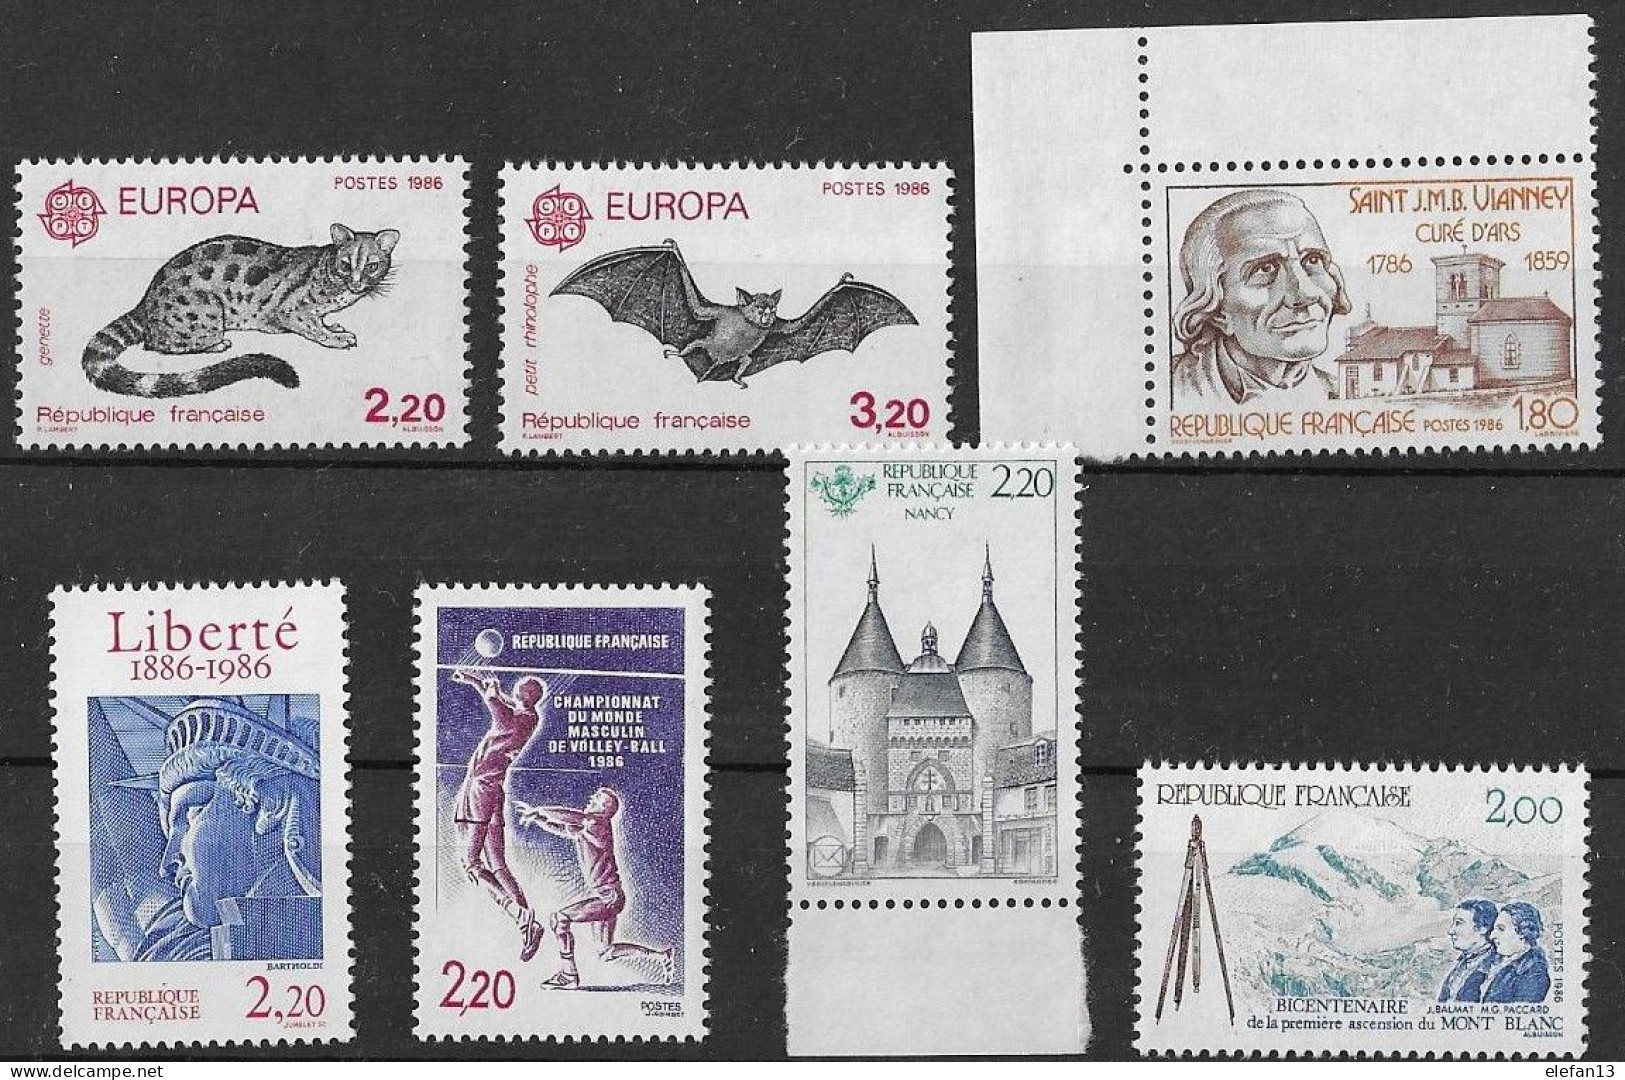 FRANCE N°2416,2417,2418,2419,2420,2421 Et 2422 ** Neufs Sans Charnière Luxe MNH - Unused Stamps